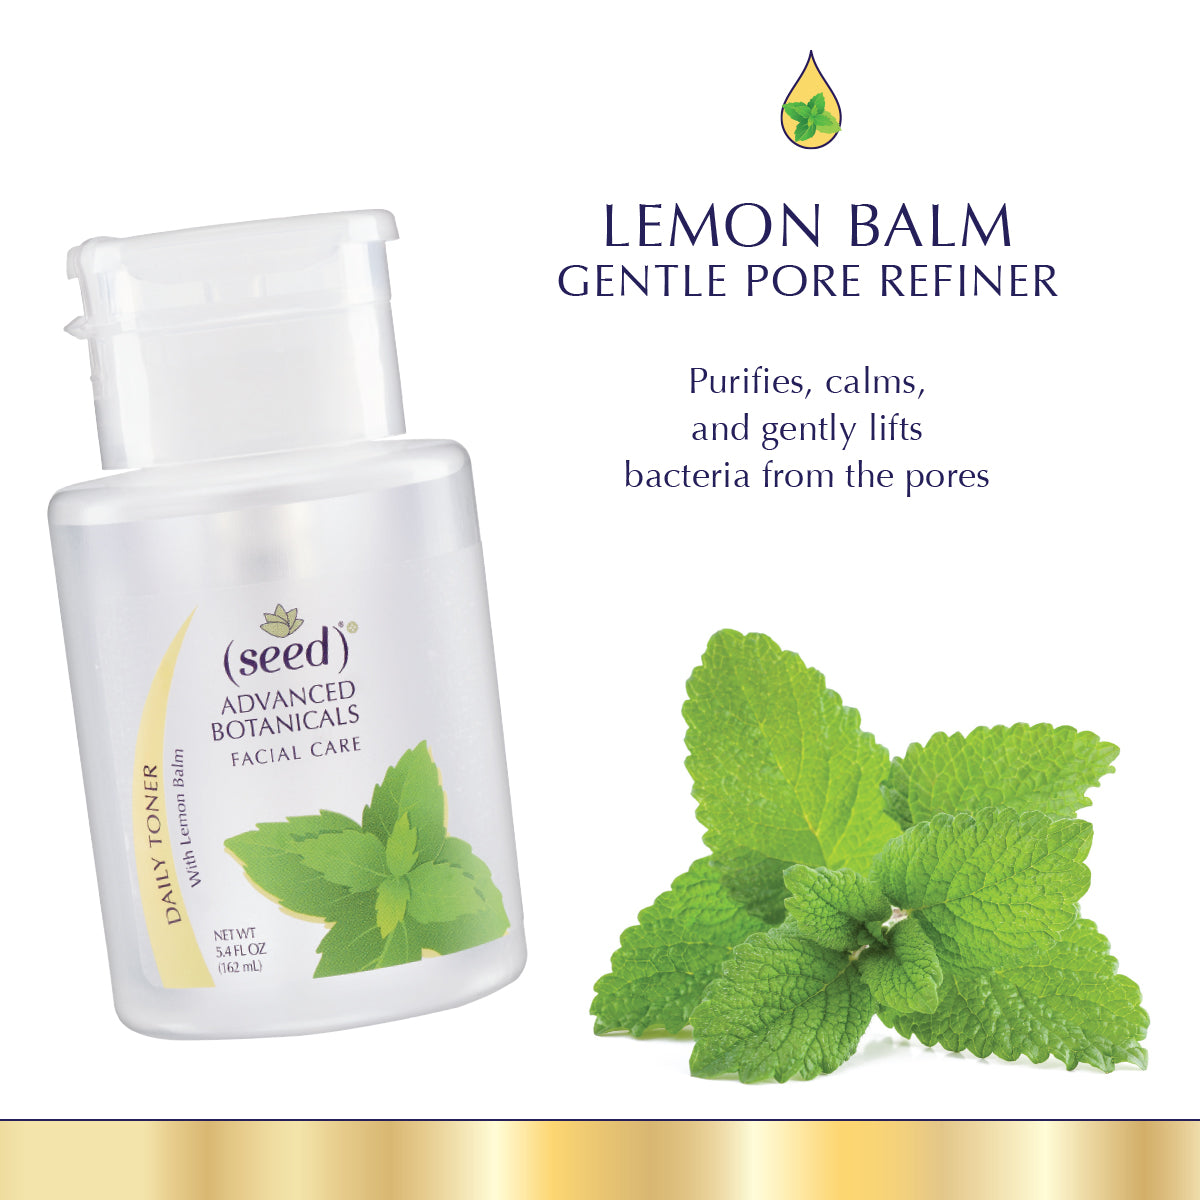 Seed Advanced Botanicals Lemon Balm Face Toner features Pure Lemon Balm Distillate